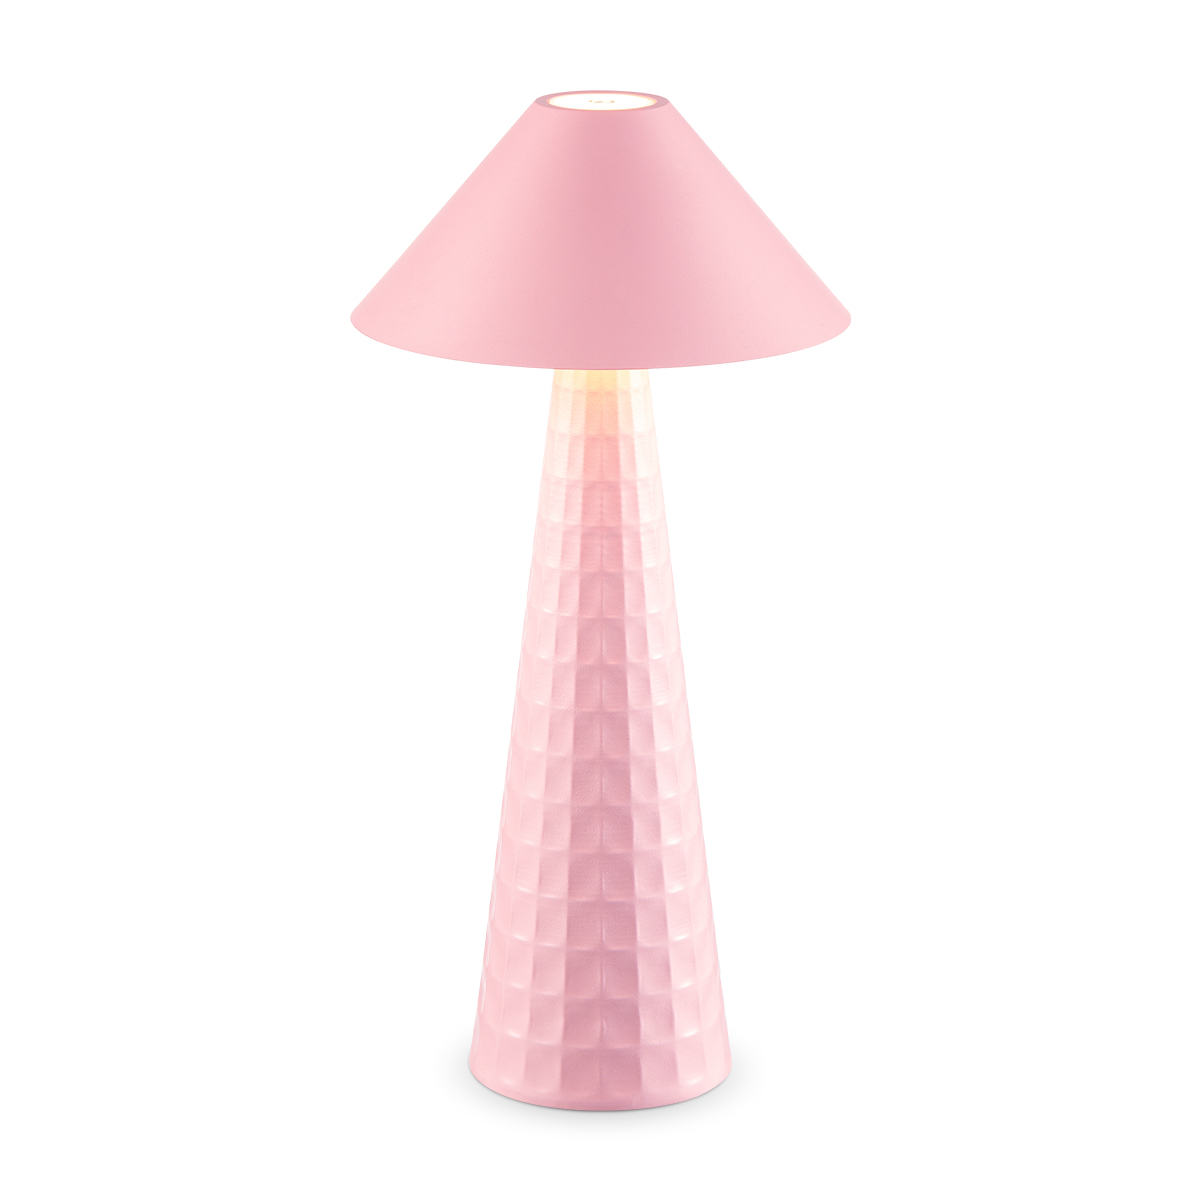 Tangla lighting - TLT7645-01PK - LED table lamp - rechargeable plastic and metal - pink - mushroom